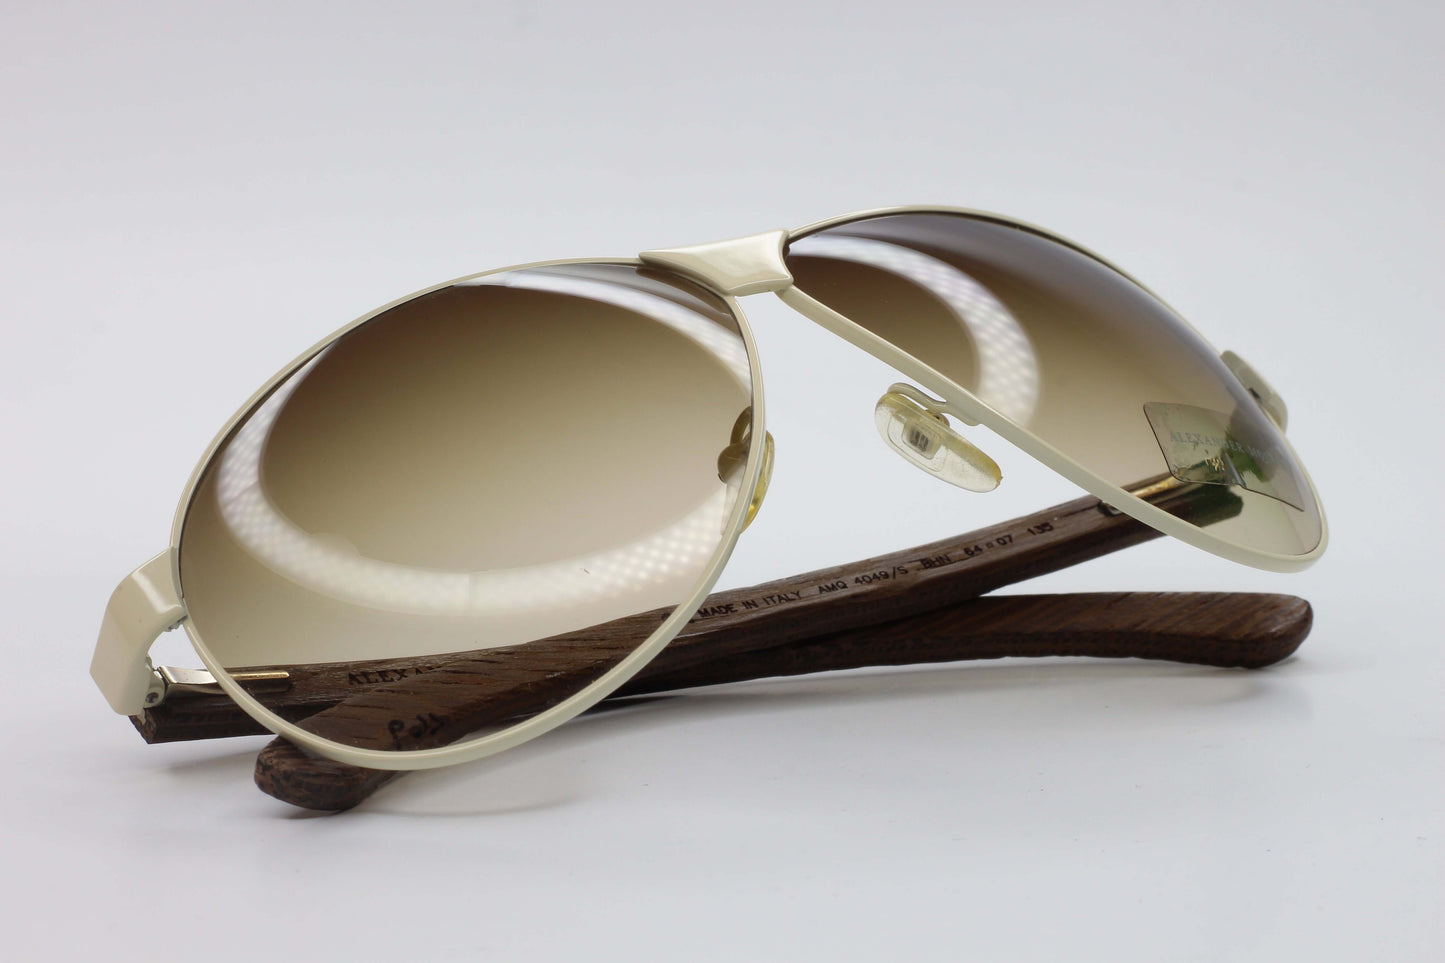 Alexander Mcqueen AMQ4049S BHN Bone White Designer Wooden Temples Luxury Sunglasses - ABC Optical